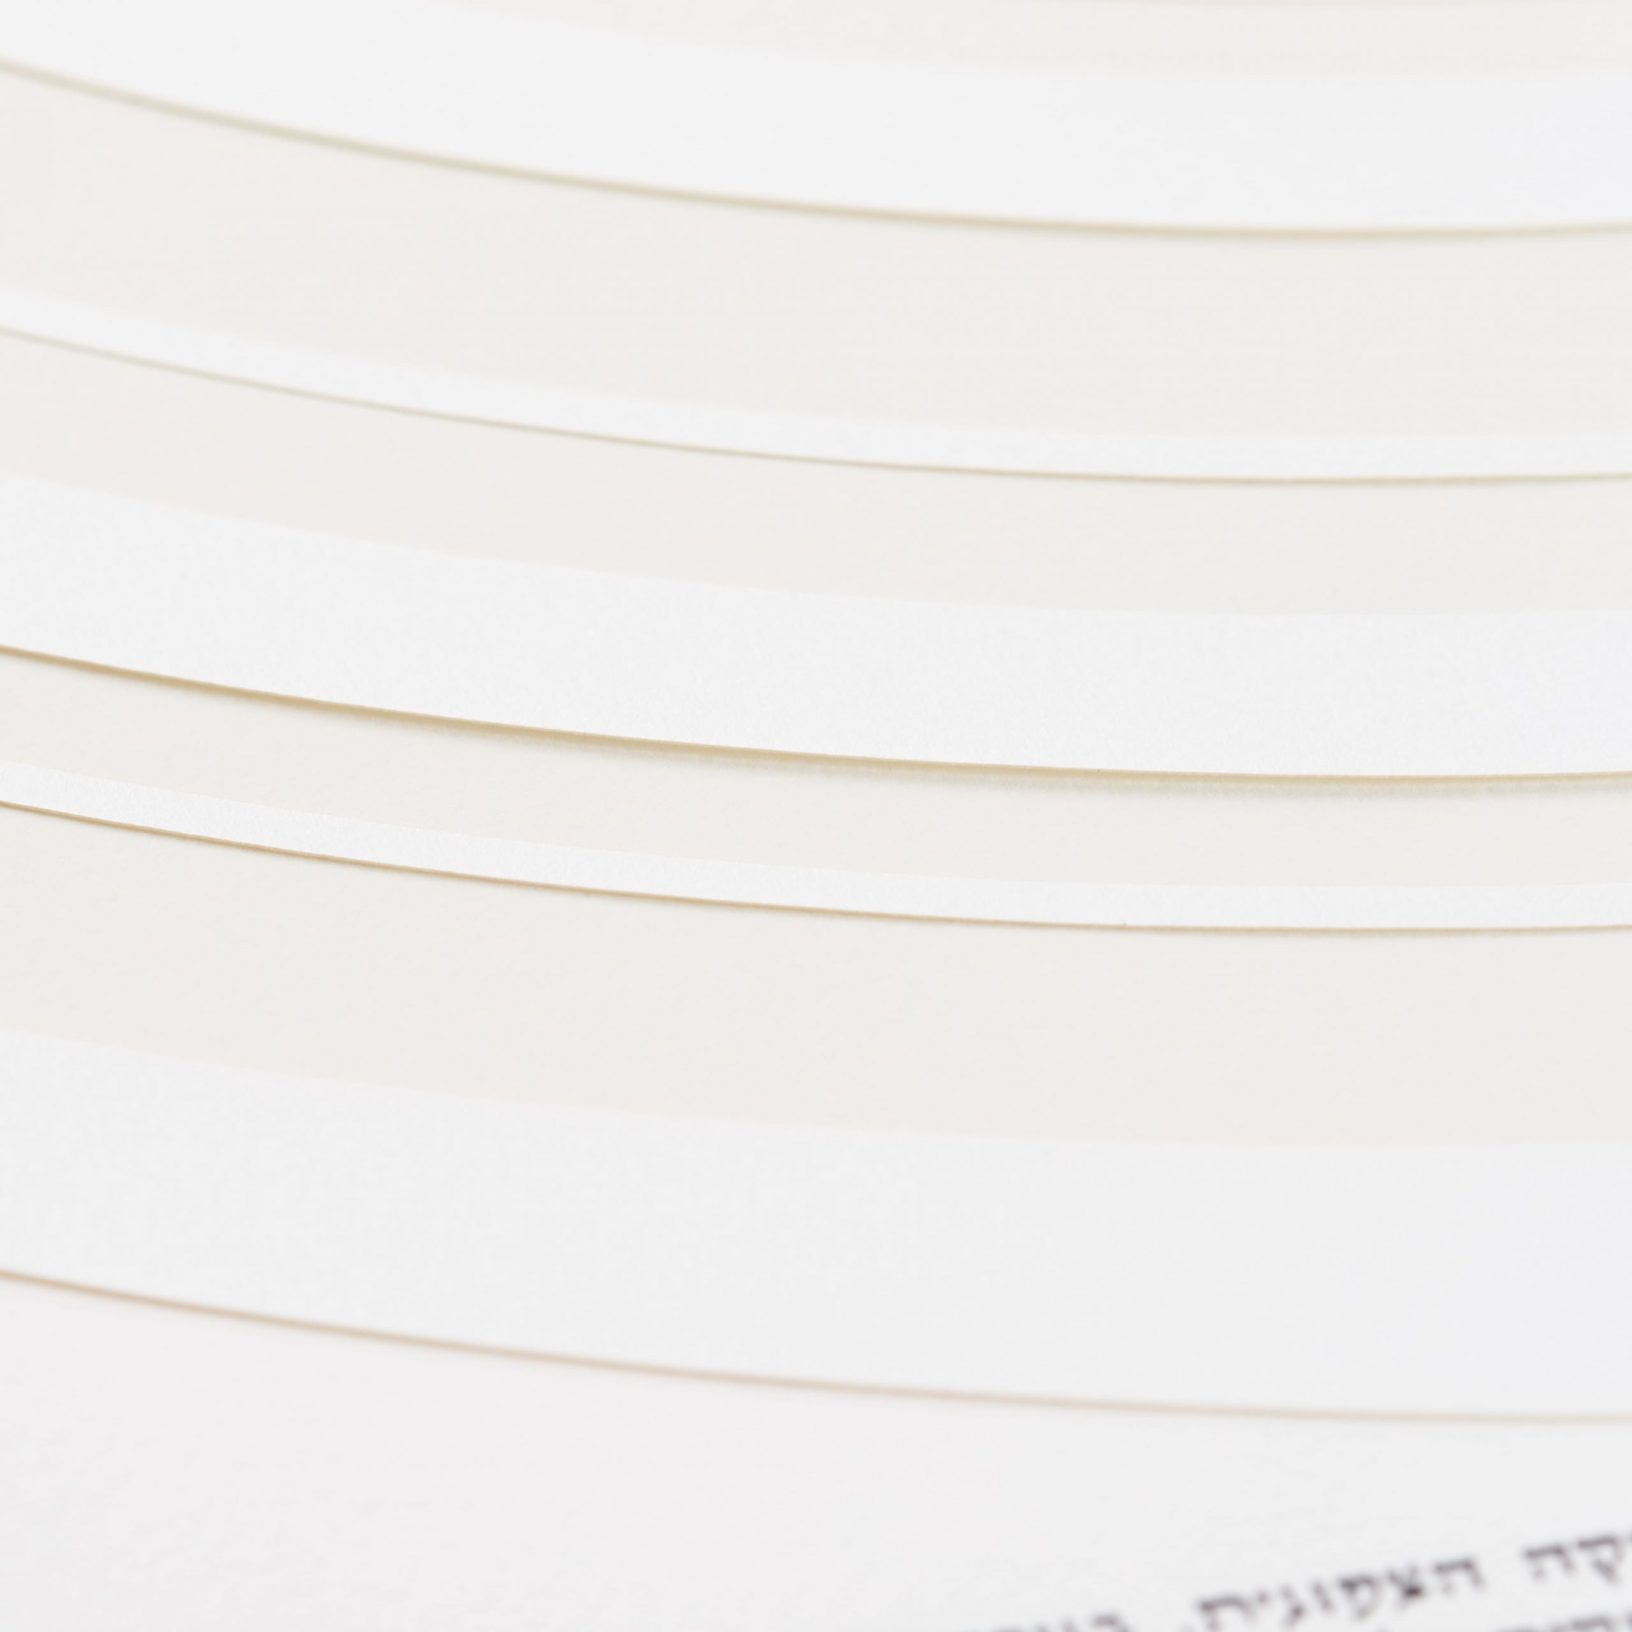 Concentric Circles Papercut III Ketubah Jewish Wedding by Shell Rummel